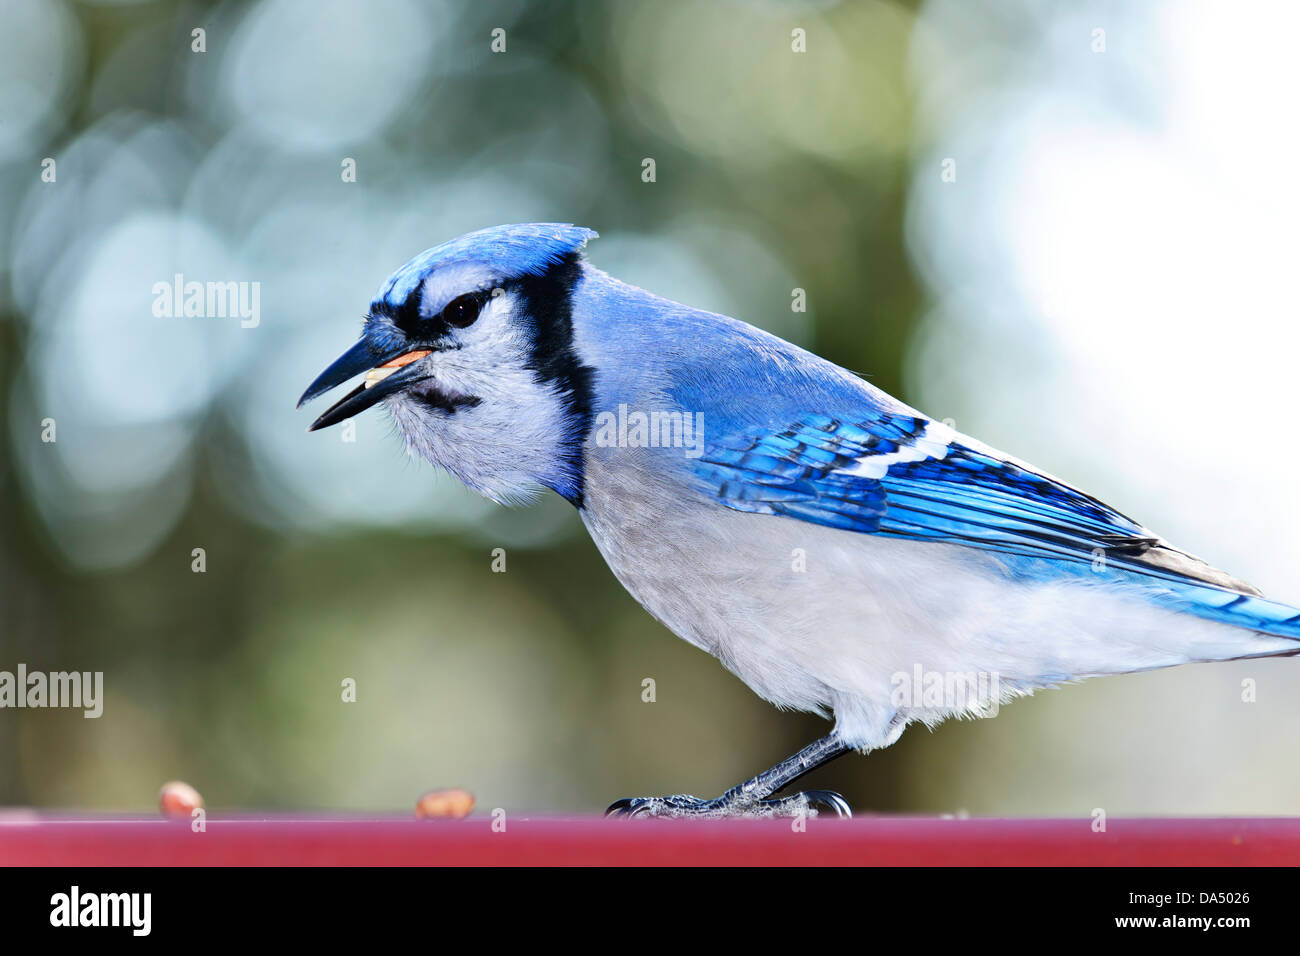 Closeup of blue jay bird eating peanuts Stock Photo